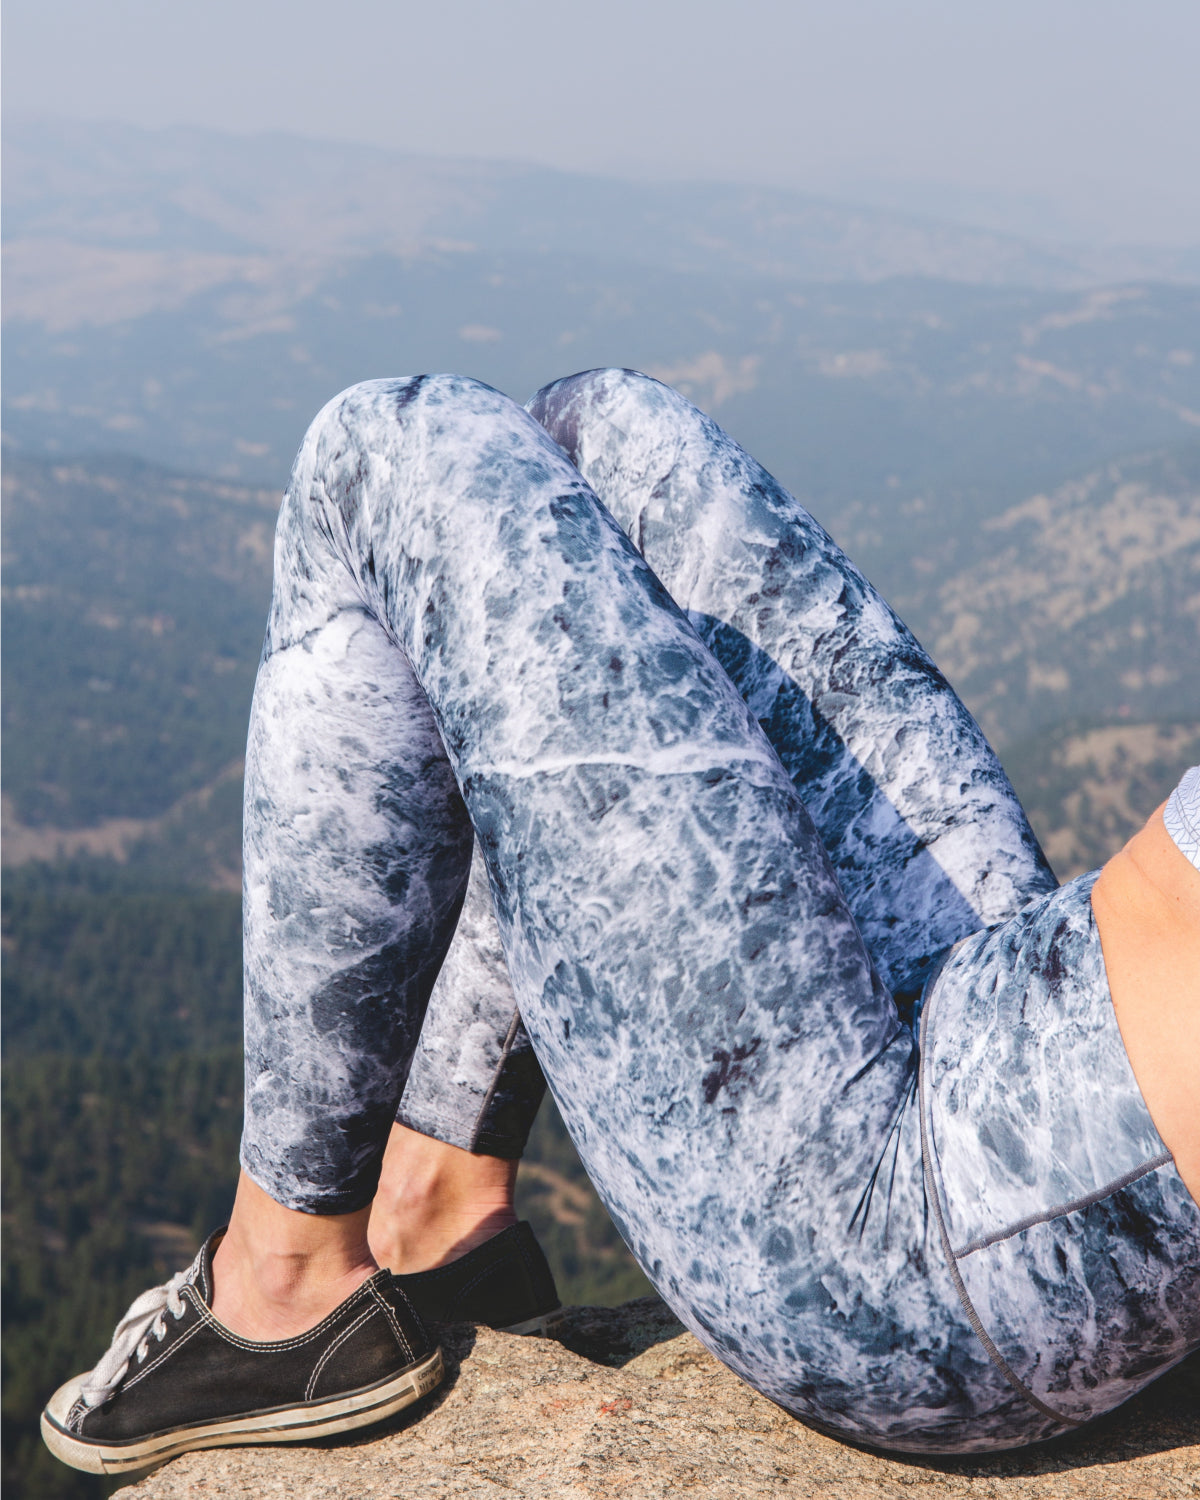 Colorado Threads Women's Black Marble Yoga Pants - Colorado Threads Clothing